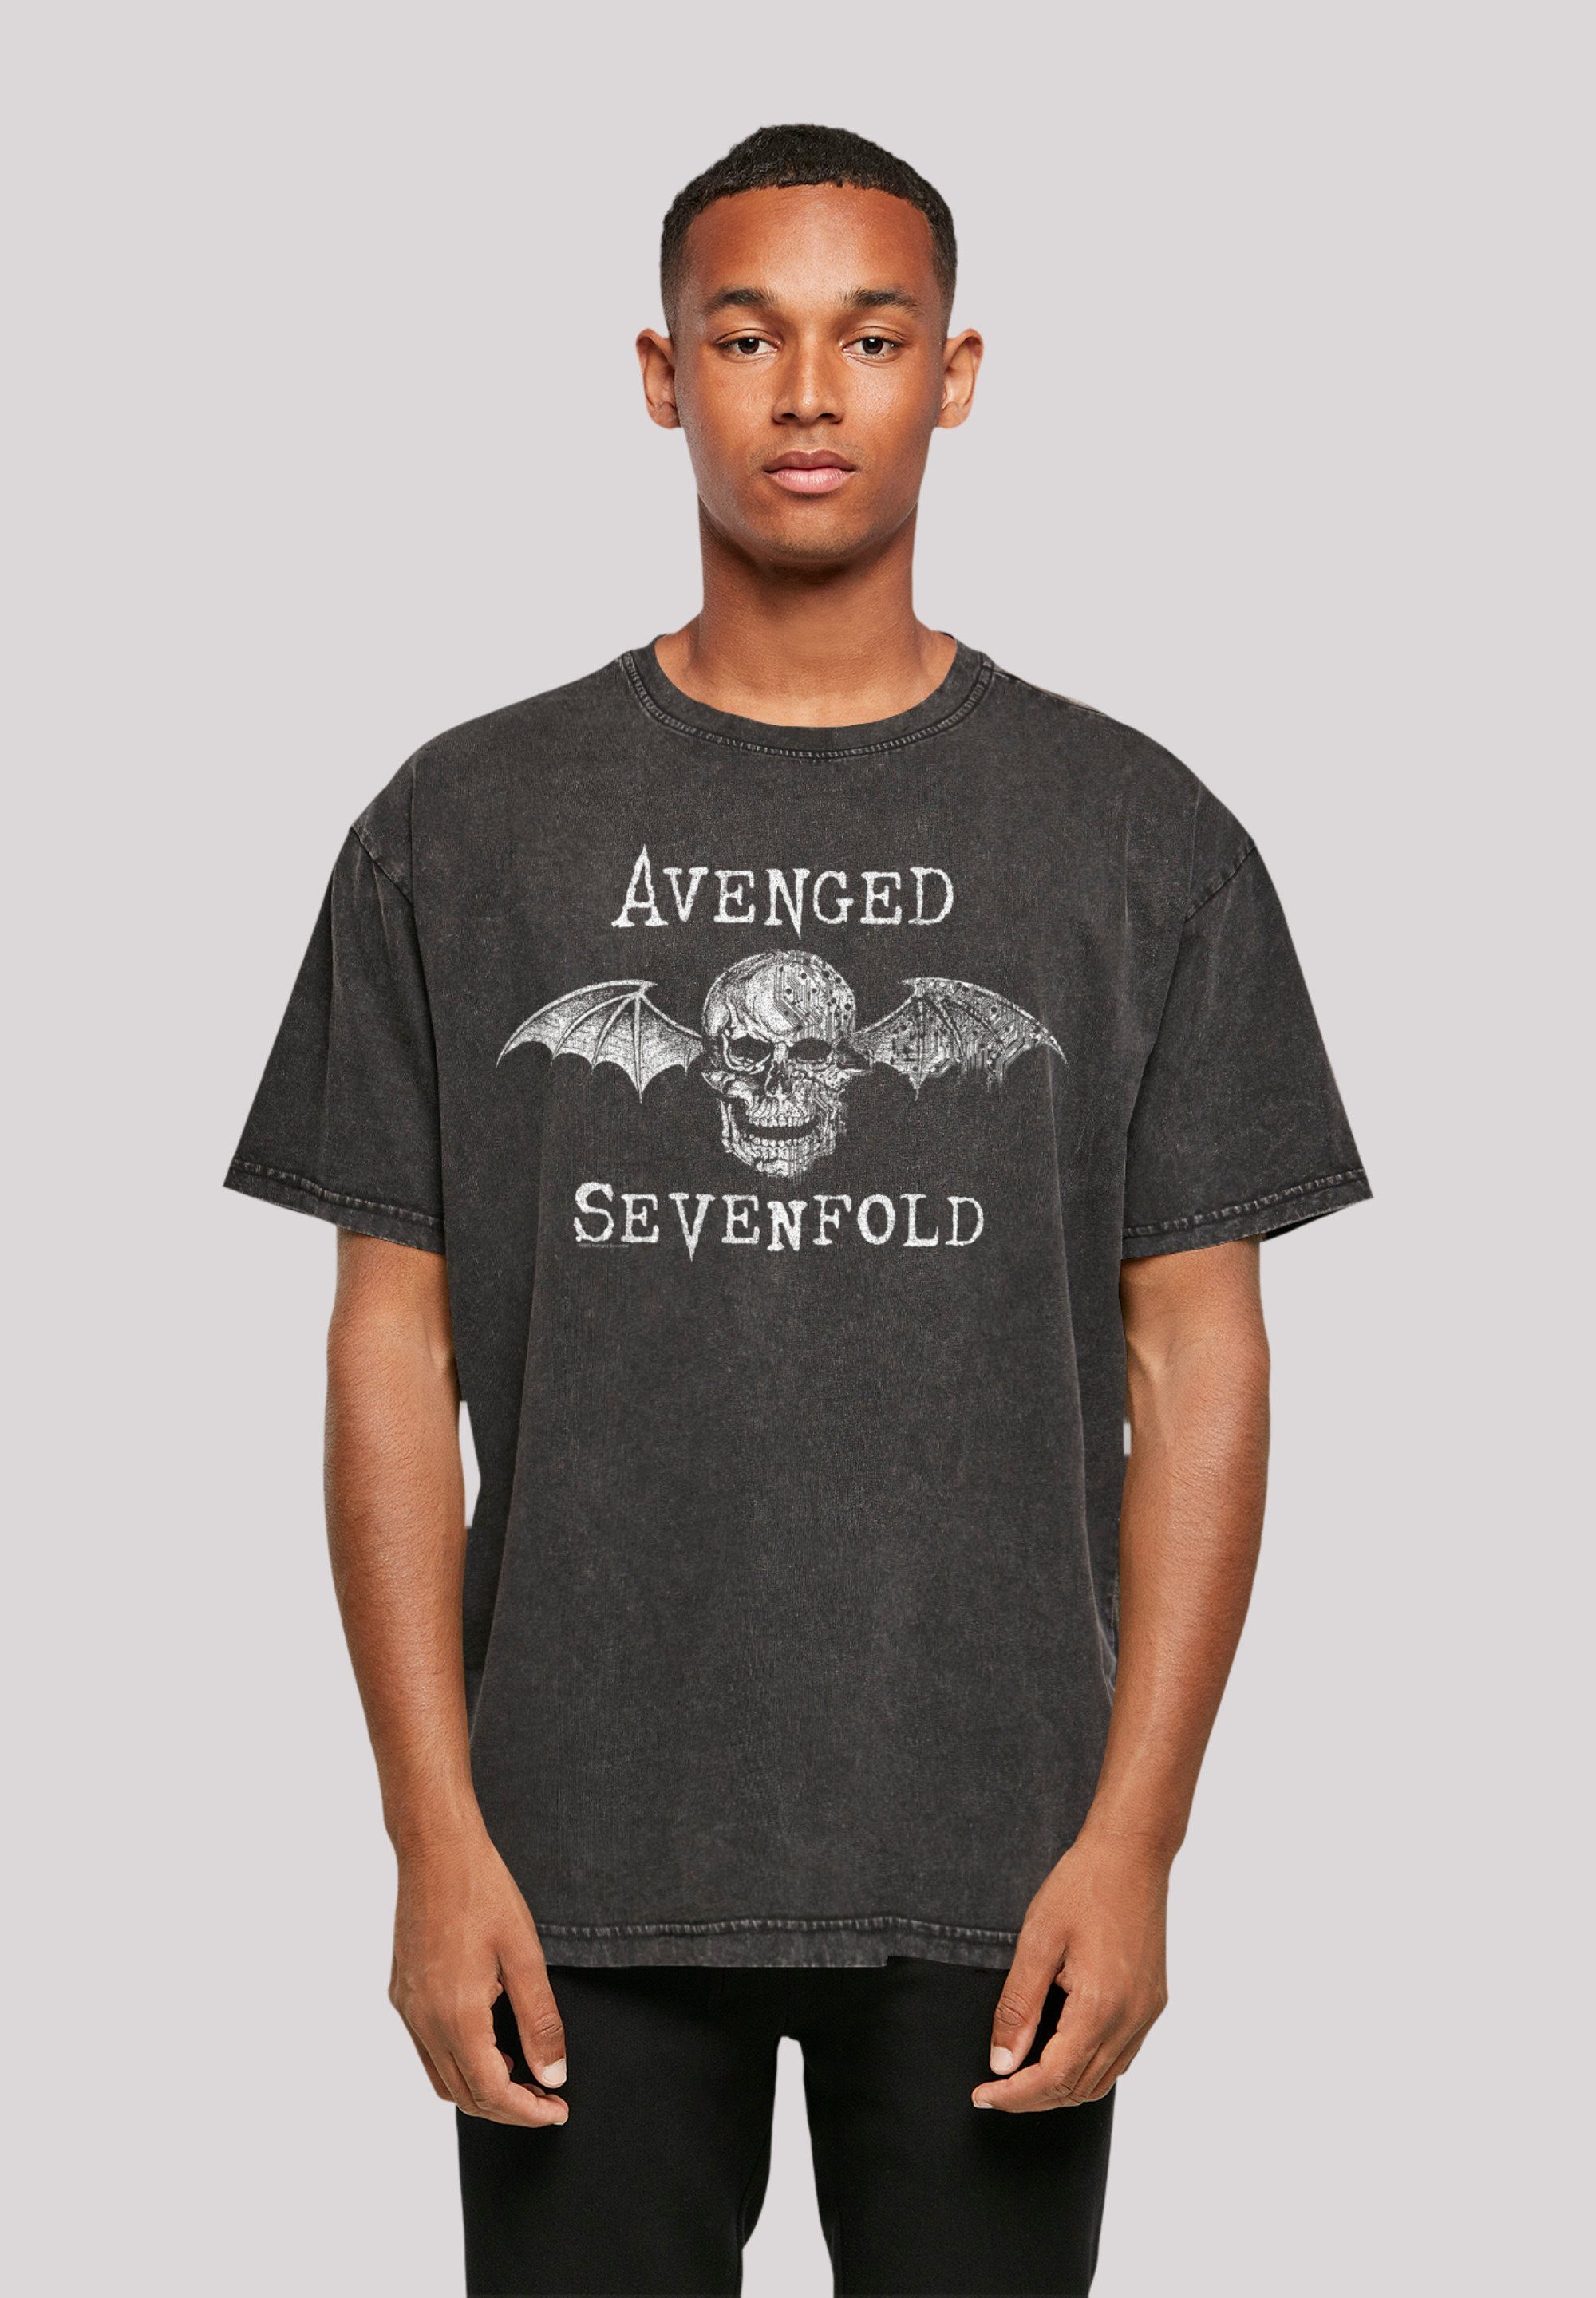 Avenged schwarz Band Rock Band, Qualität, Metal F4NT4STIC Sevenfold T-Shirt Rock-Musik Cyborg Premium Bat